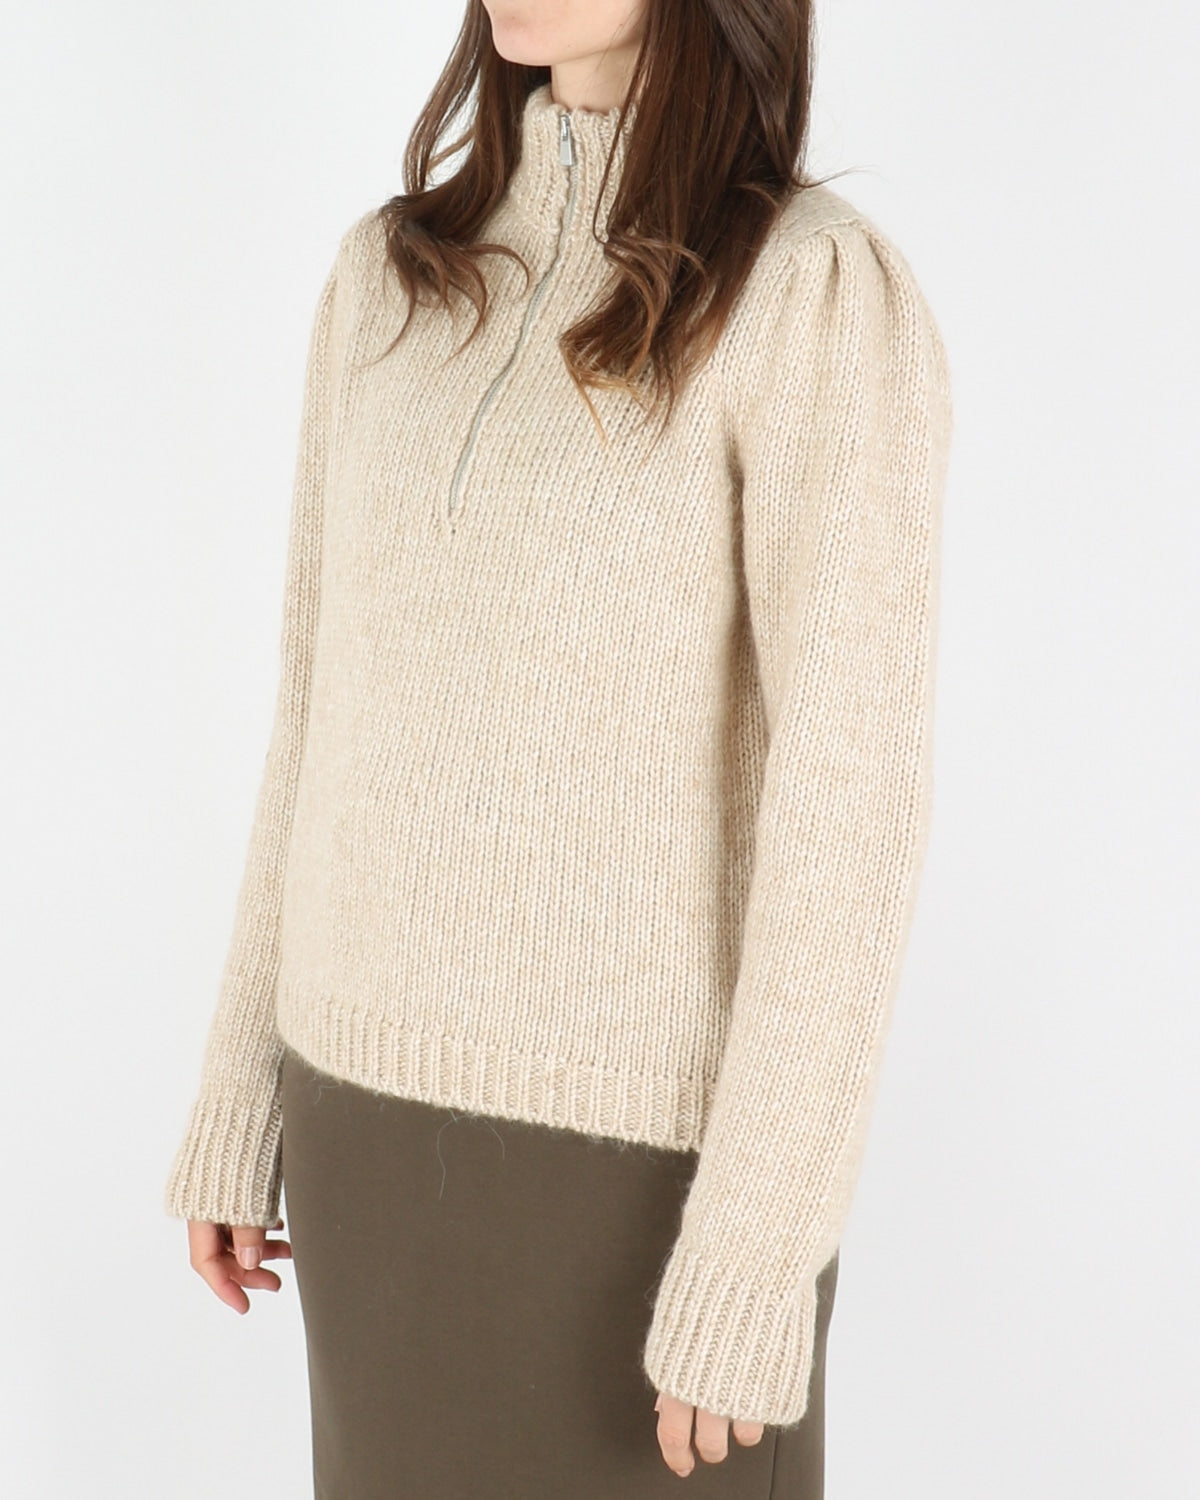 blanche_mouline sweater knit_brazilian sand_2_3